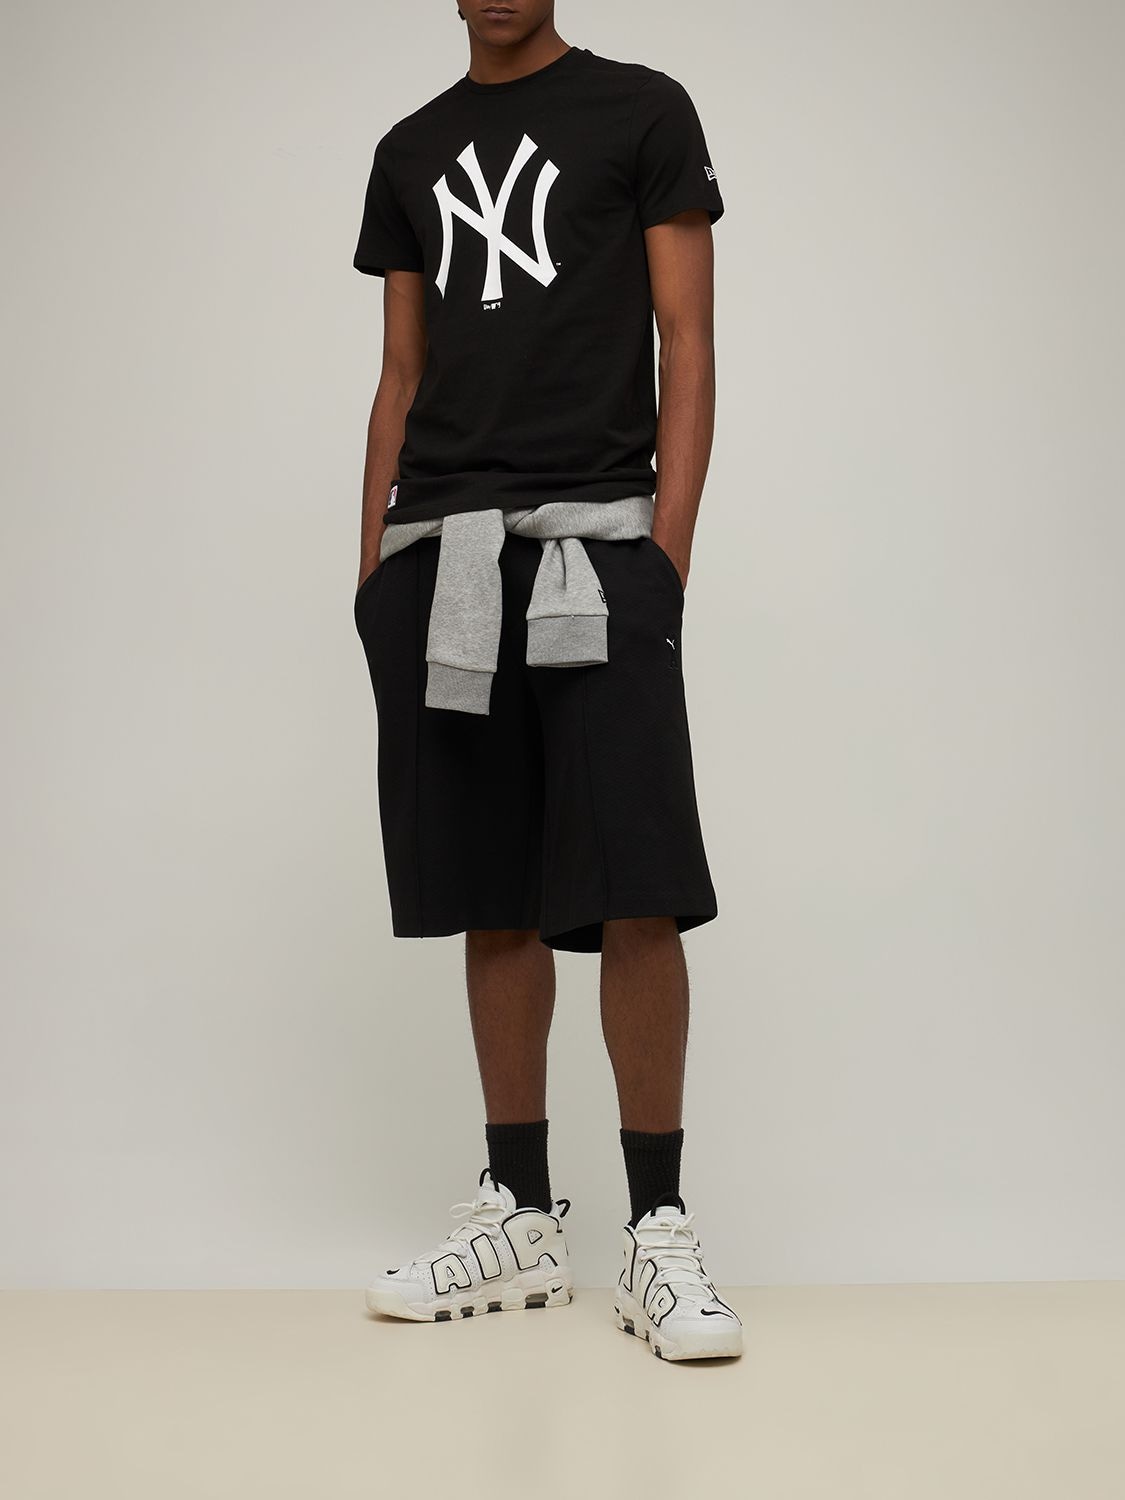 New Era T-shirt - New York Yankees - Black » Cheap Shipping